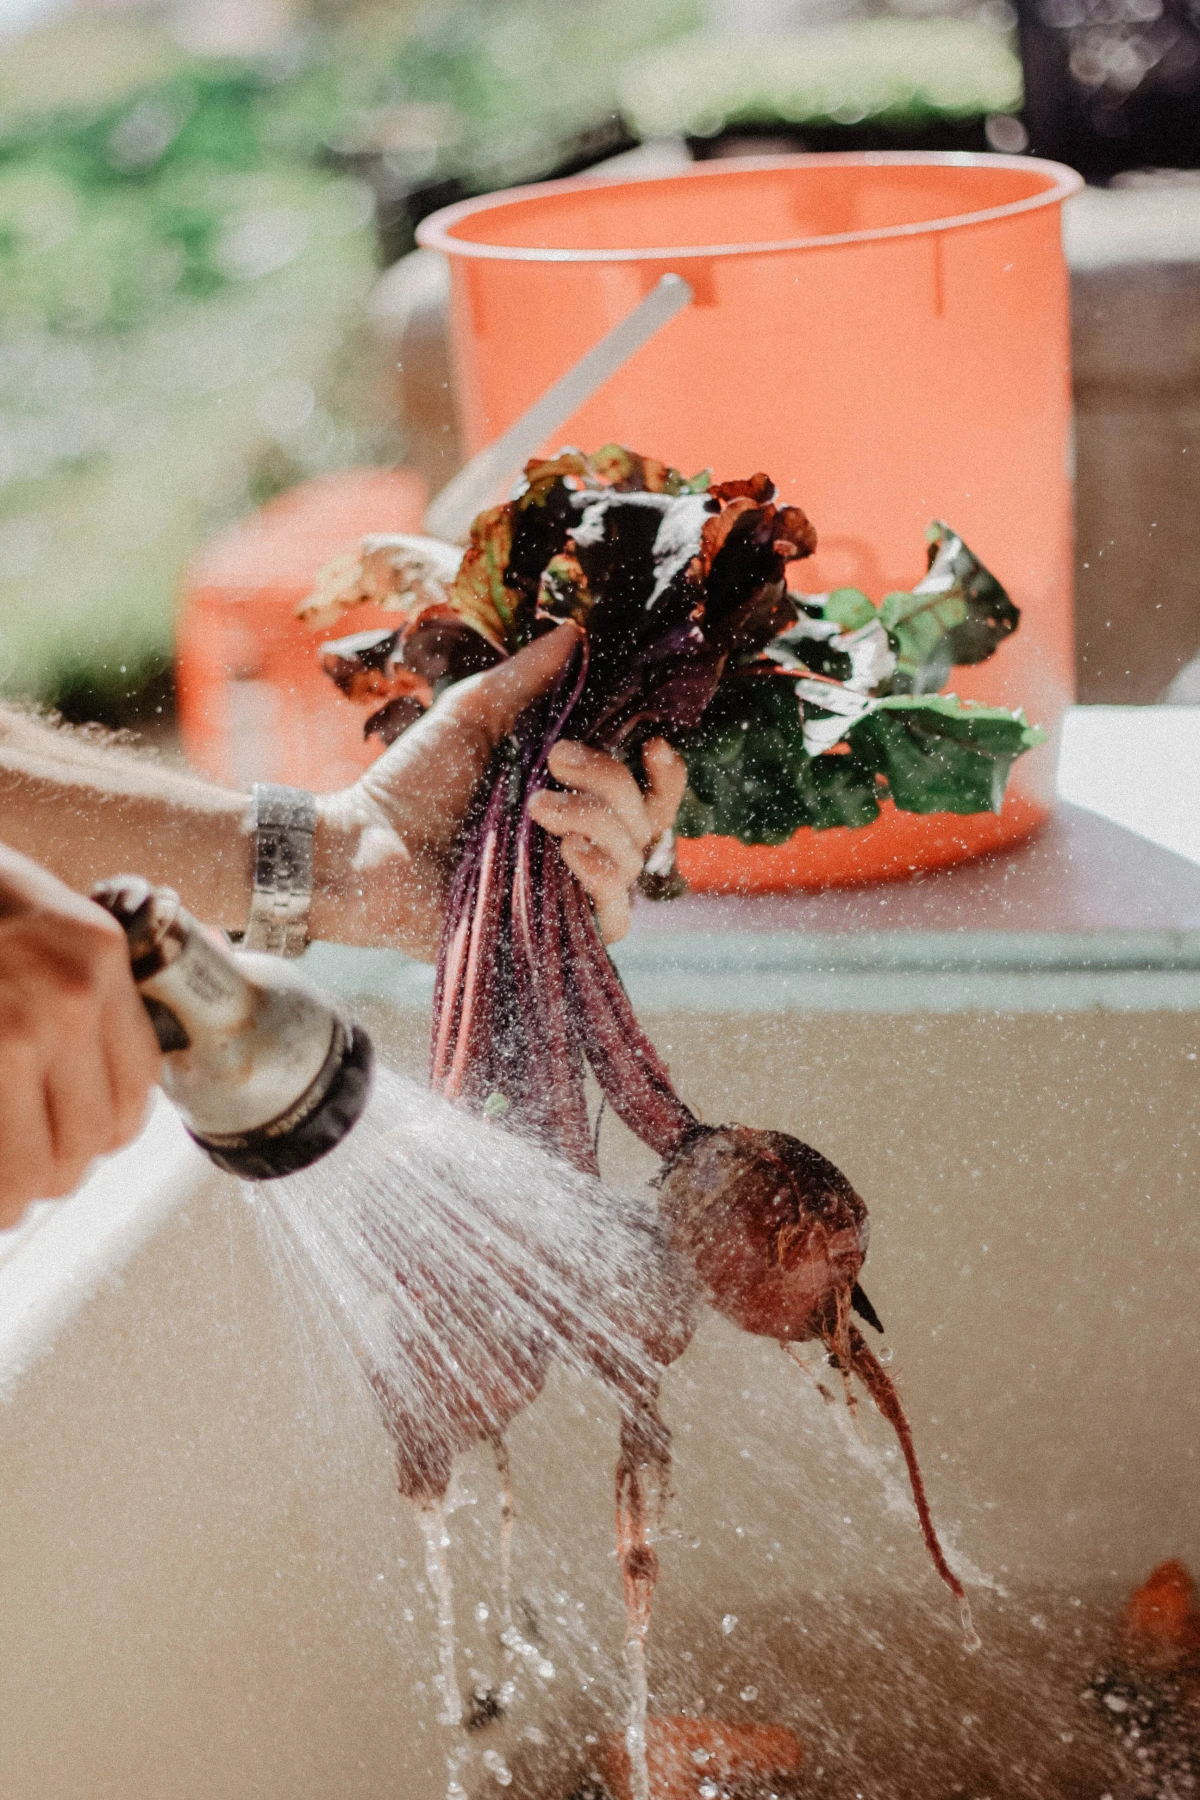 benefits of indoor gardening person washing beets